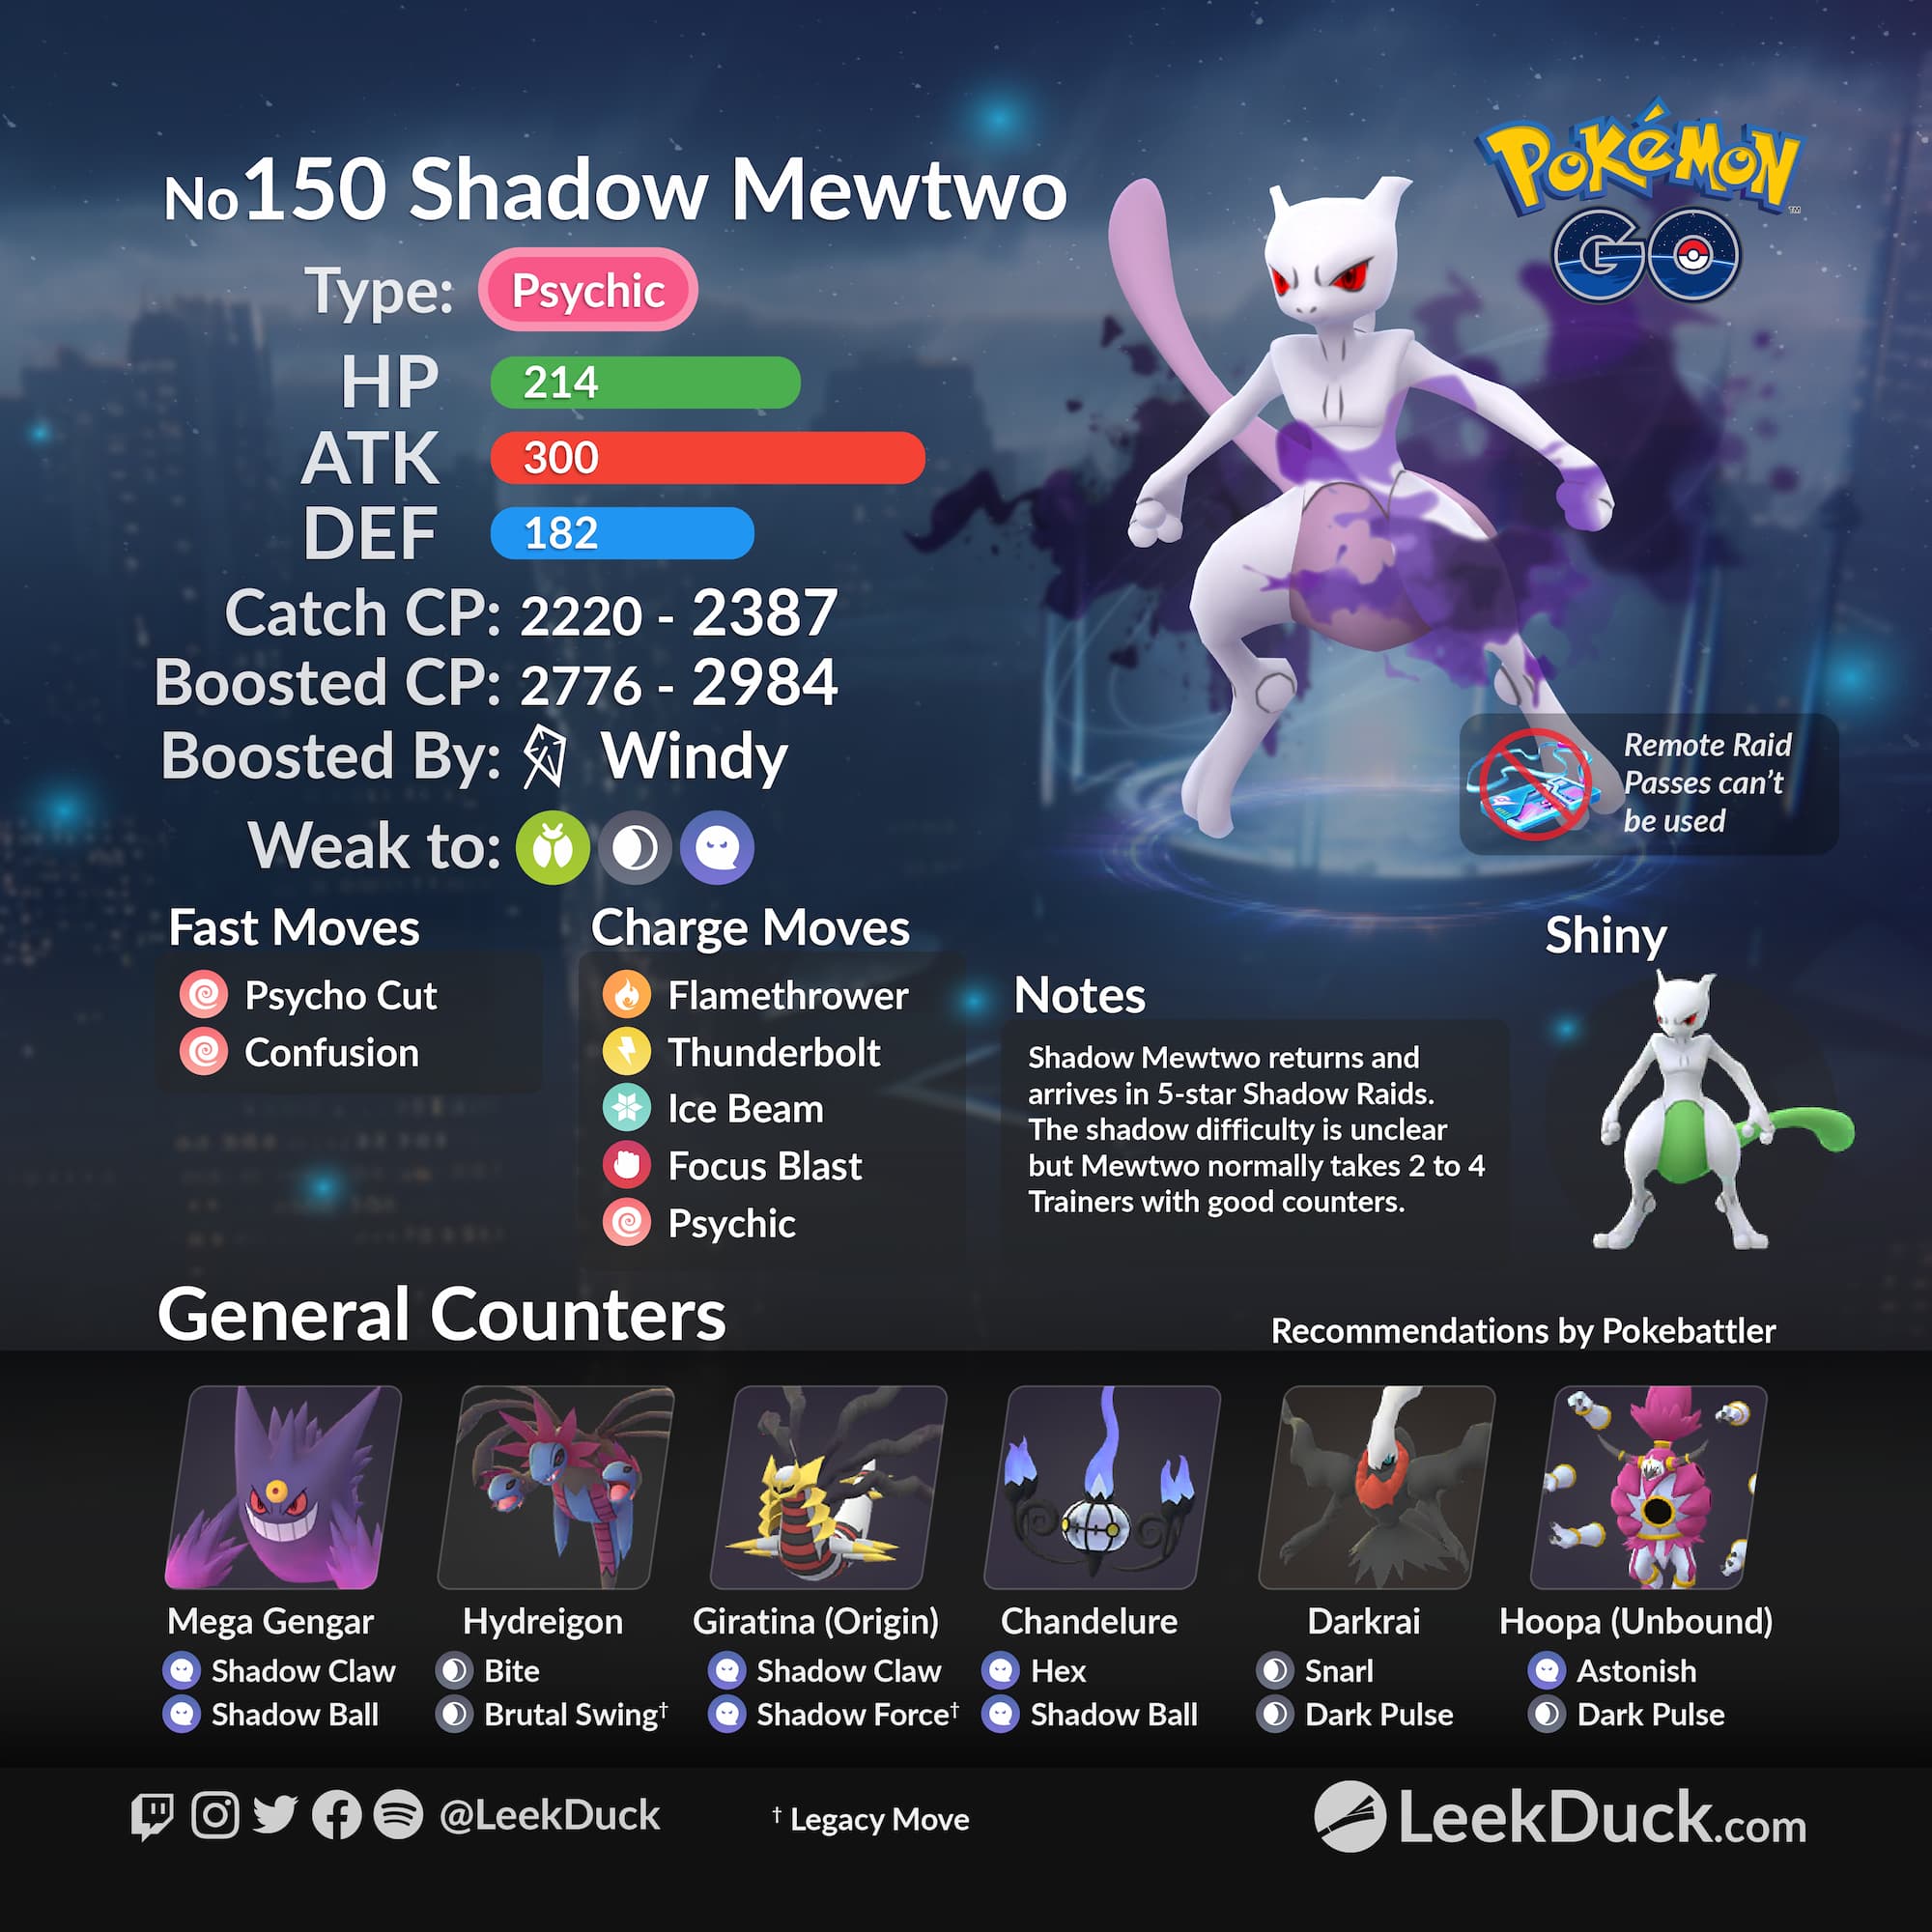 Shadow Mewtwo in Shadow Raids Leek Duck Pokémon GO News and Resources